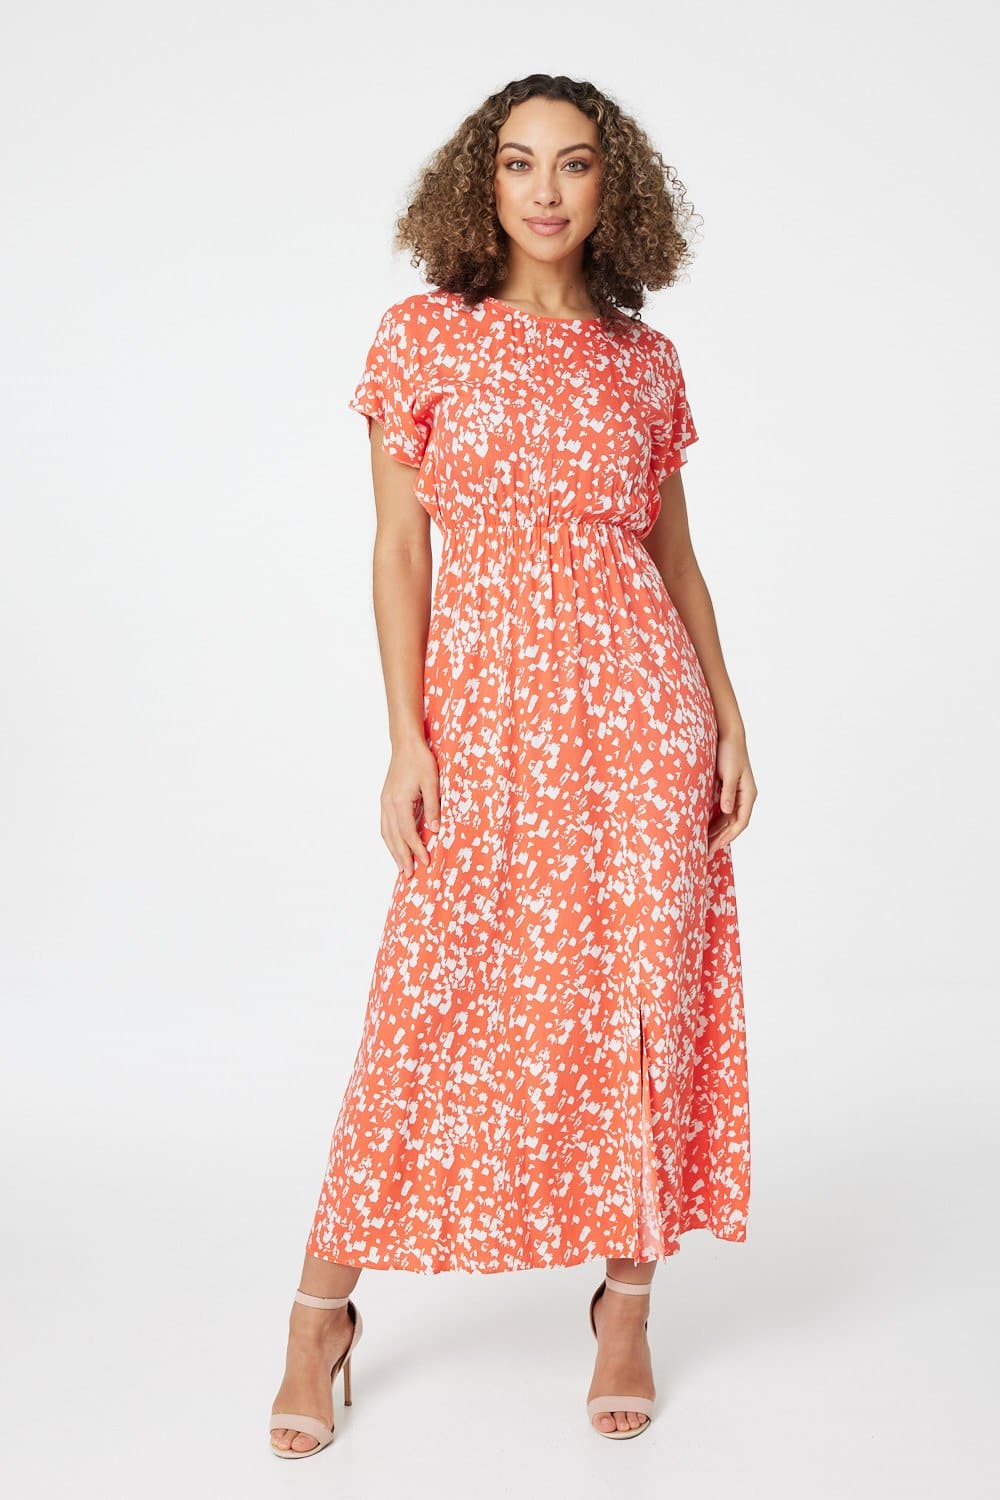 Coral | Printed Short Sleeve Midi Dress : Model is 5'8"/172 cm and wears UK8/EU36/US4/AUS8